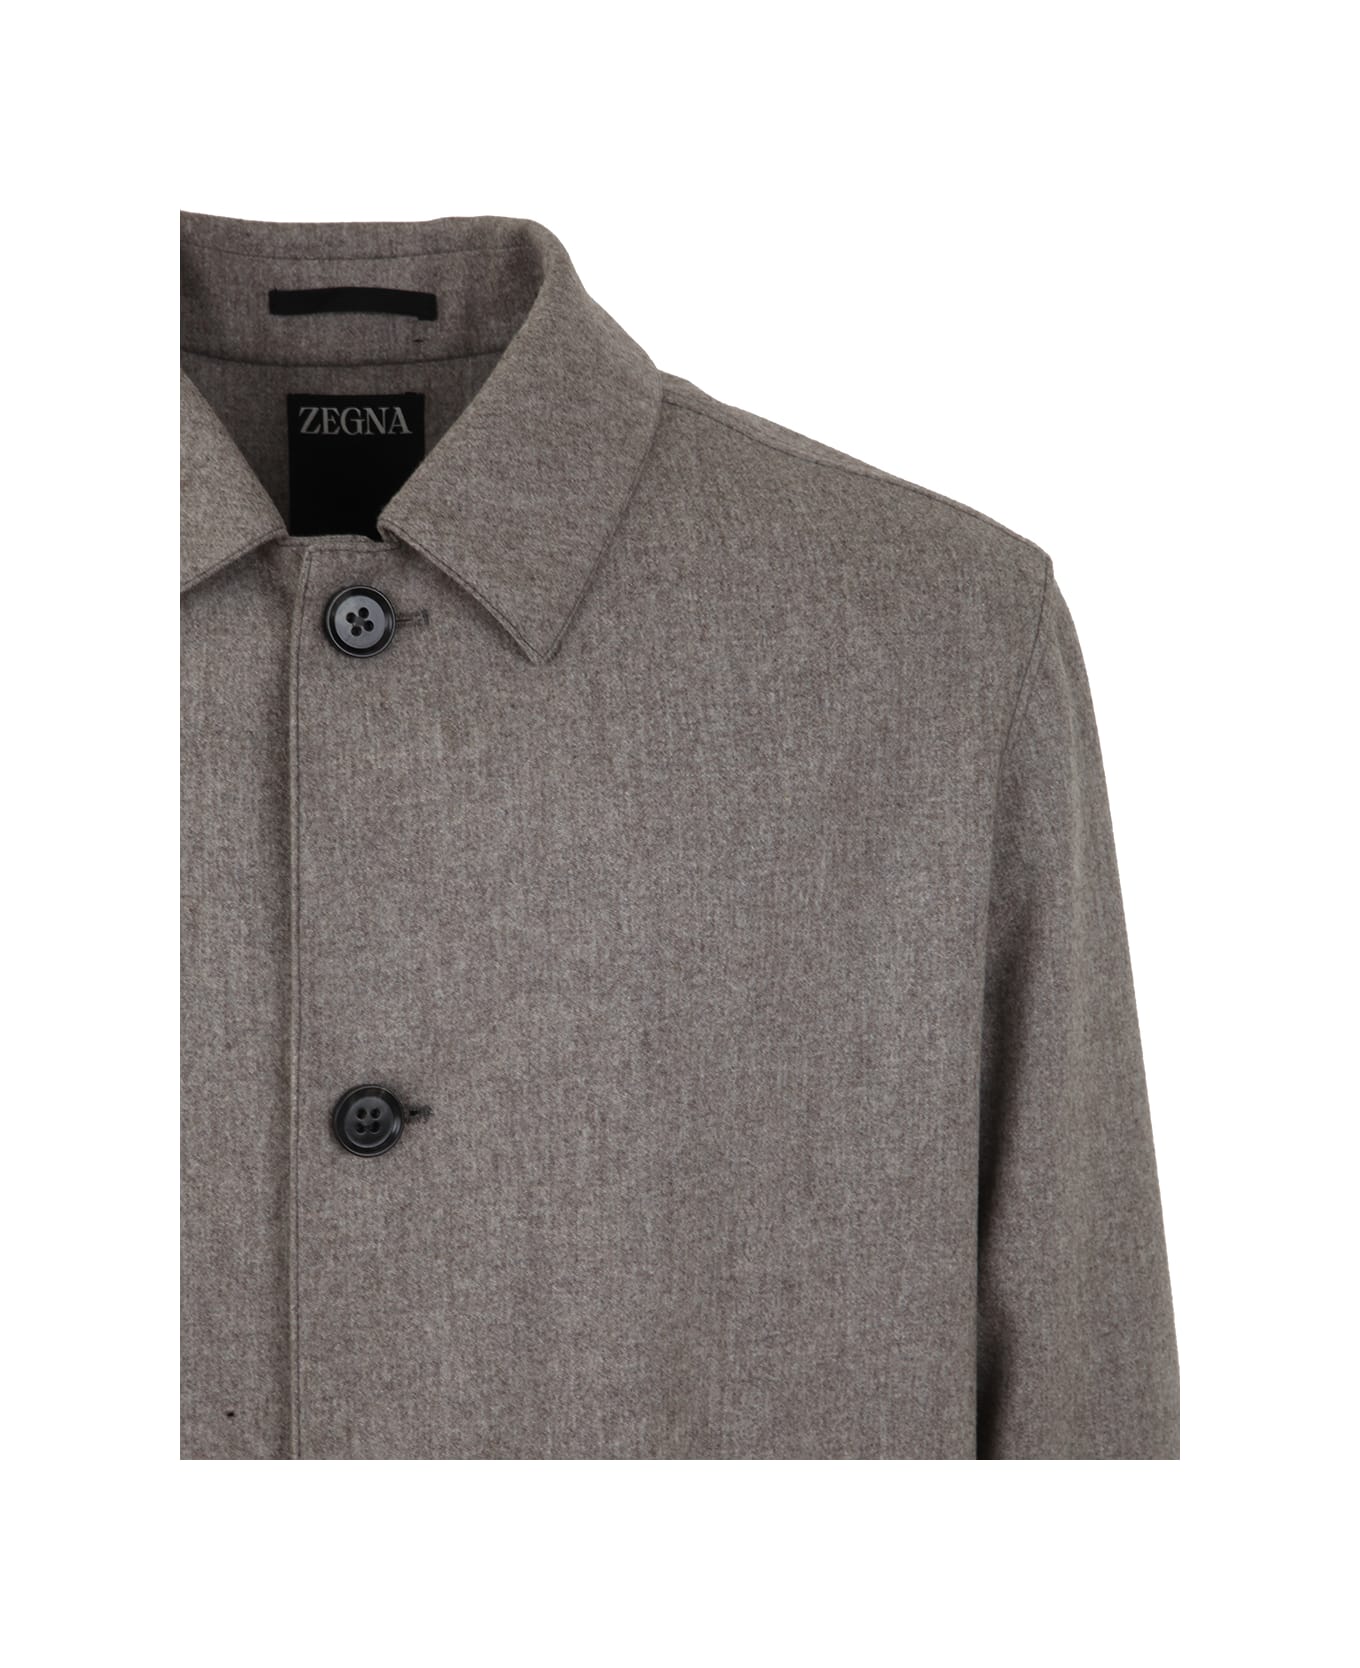 Zegna Pure Wool Flannel Chore Jacket - Beige